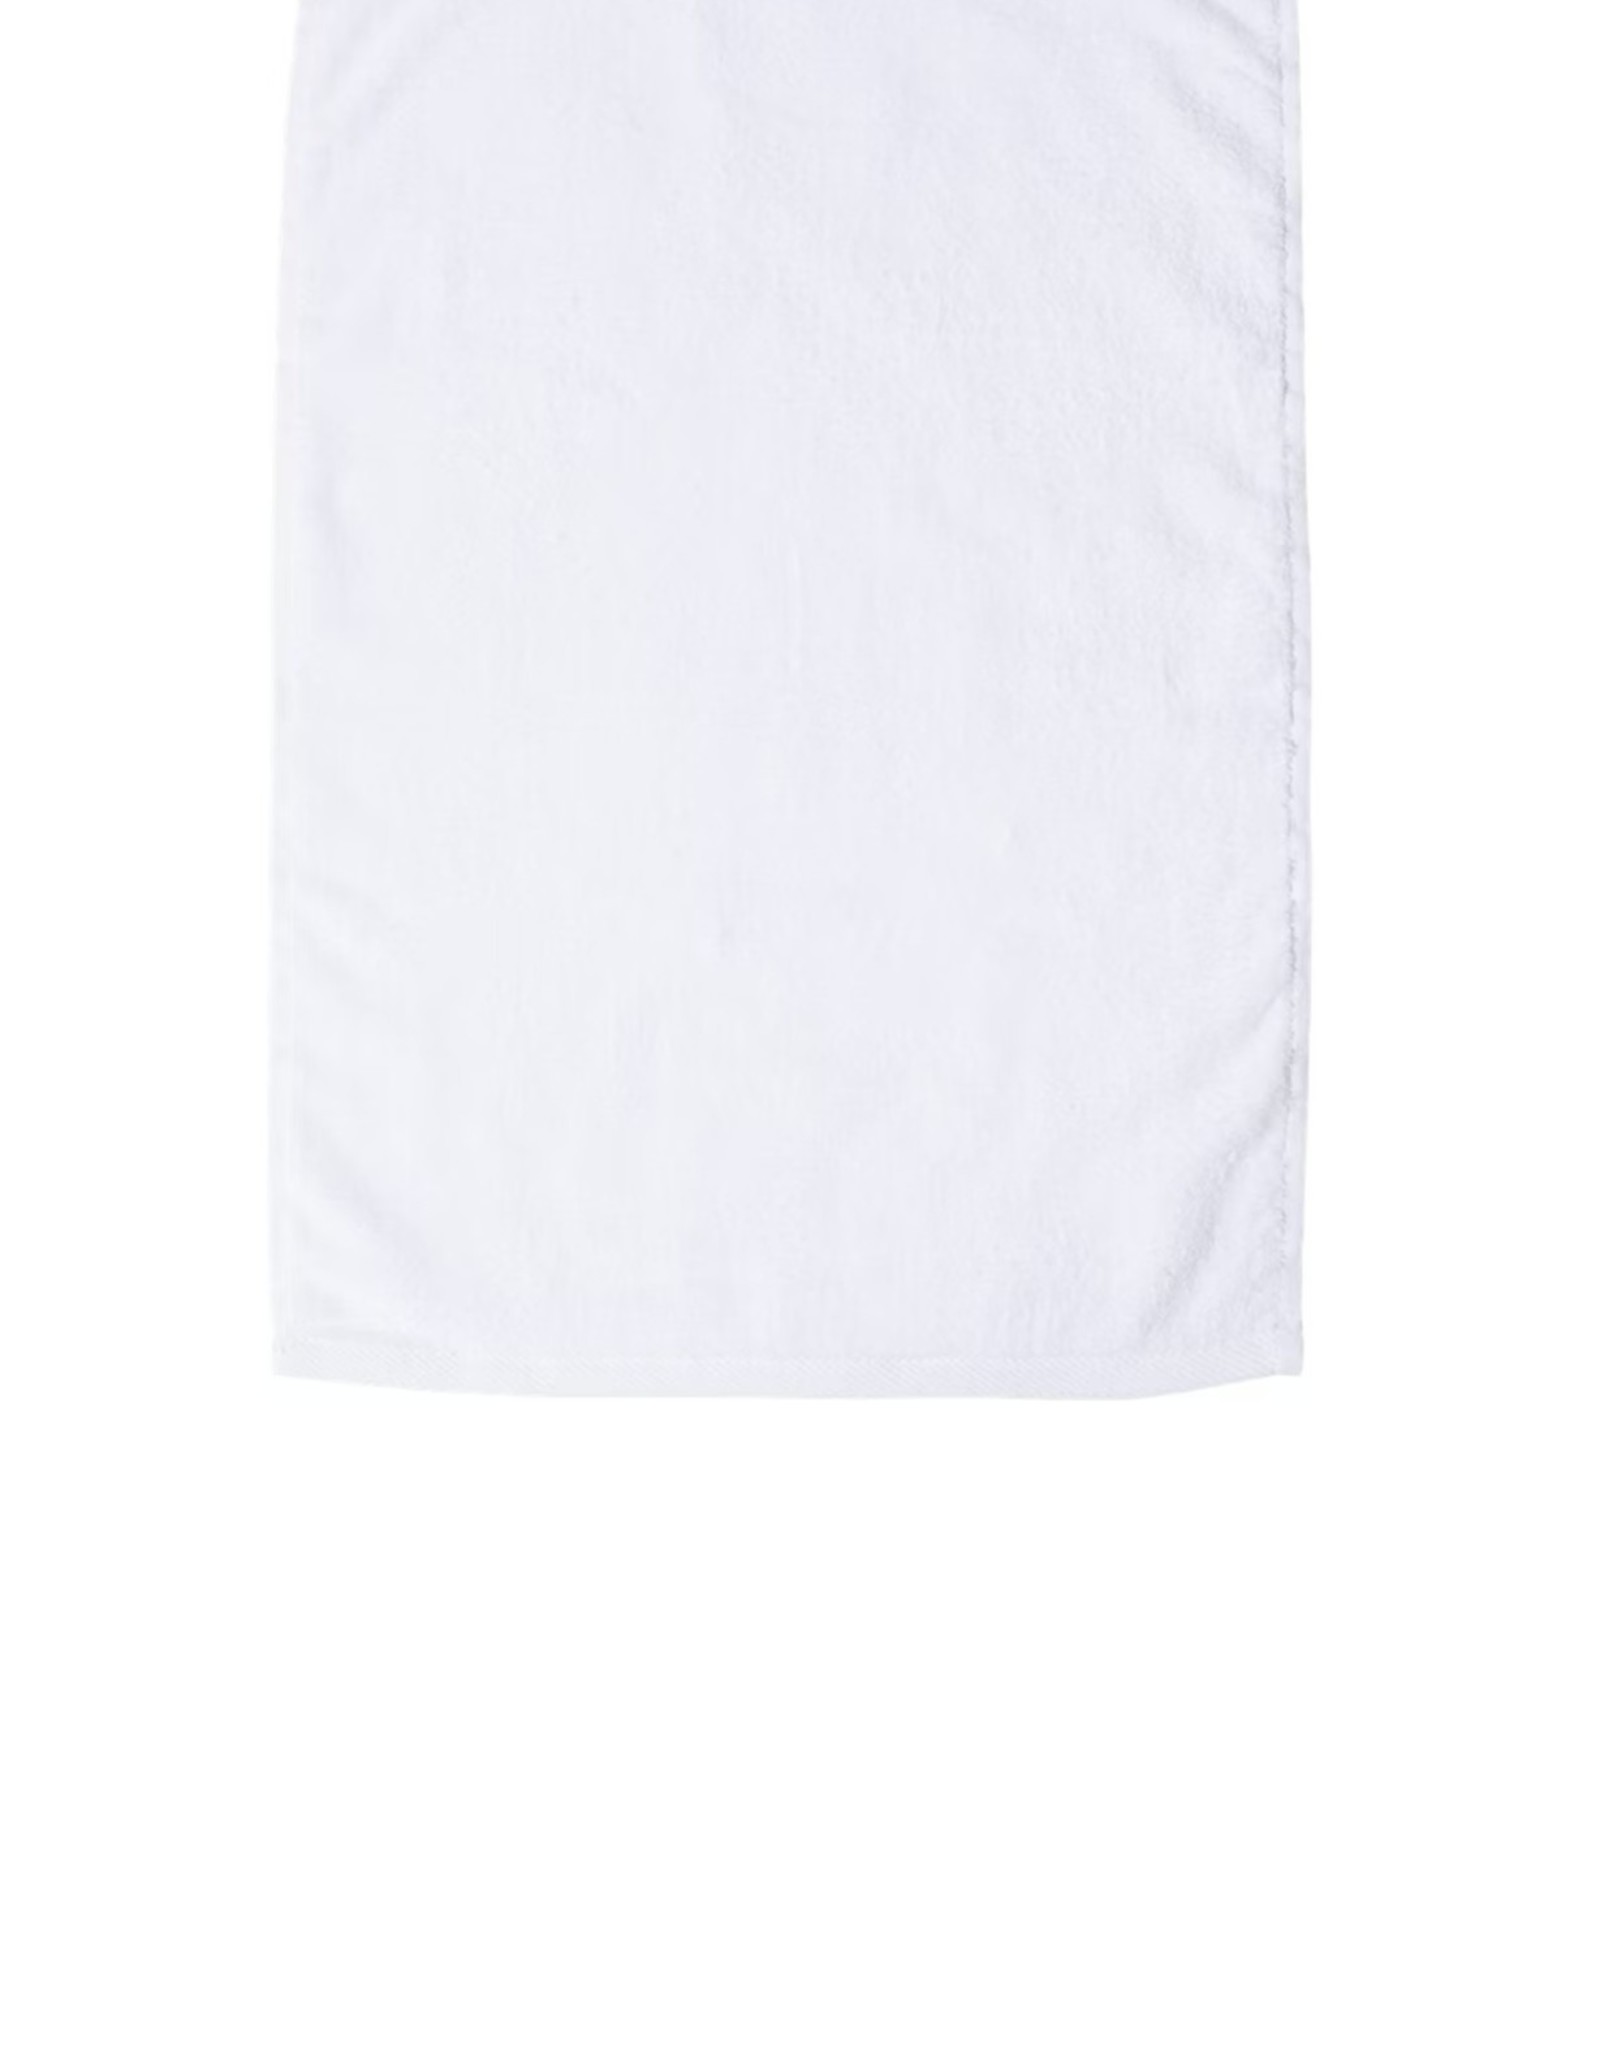 White Cotton Hand Towel (15x18)